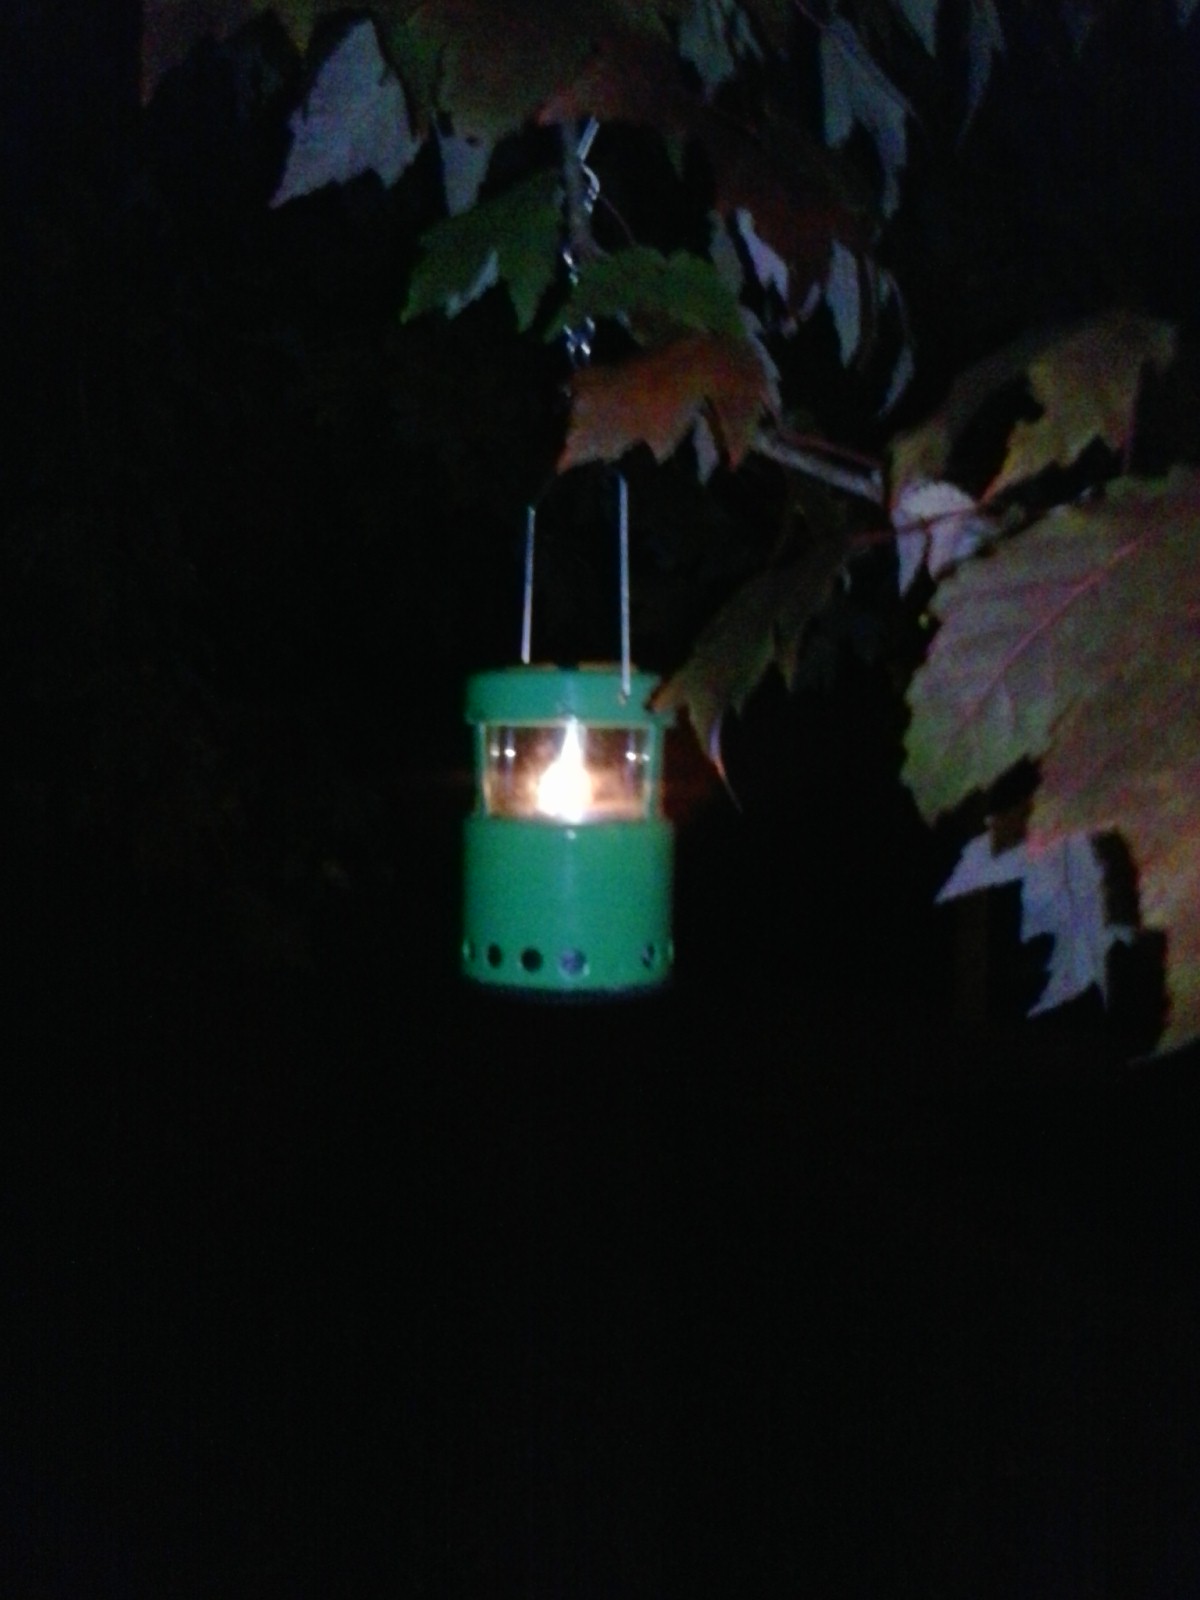 uco micro candle lantern